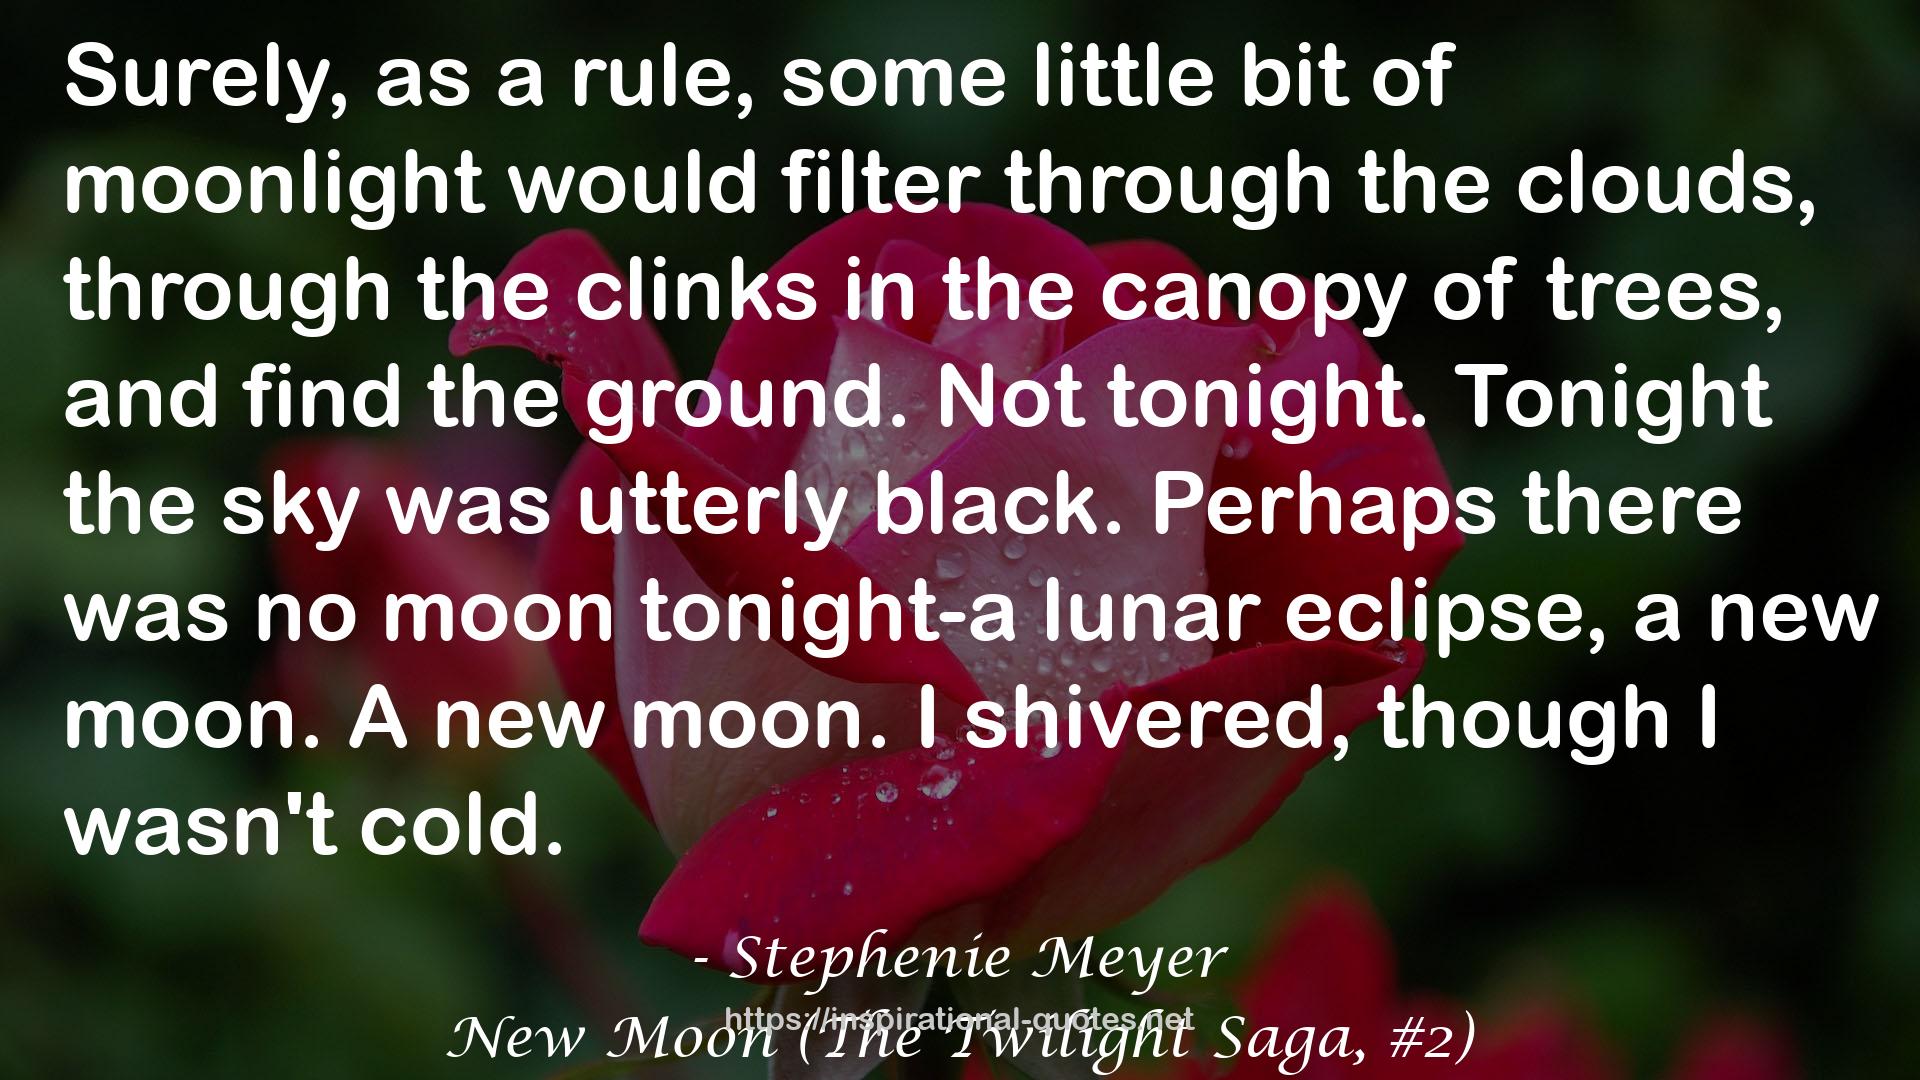 New Moon (The Twilight Saga, #2) QUOTES